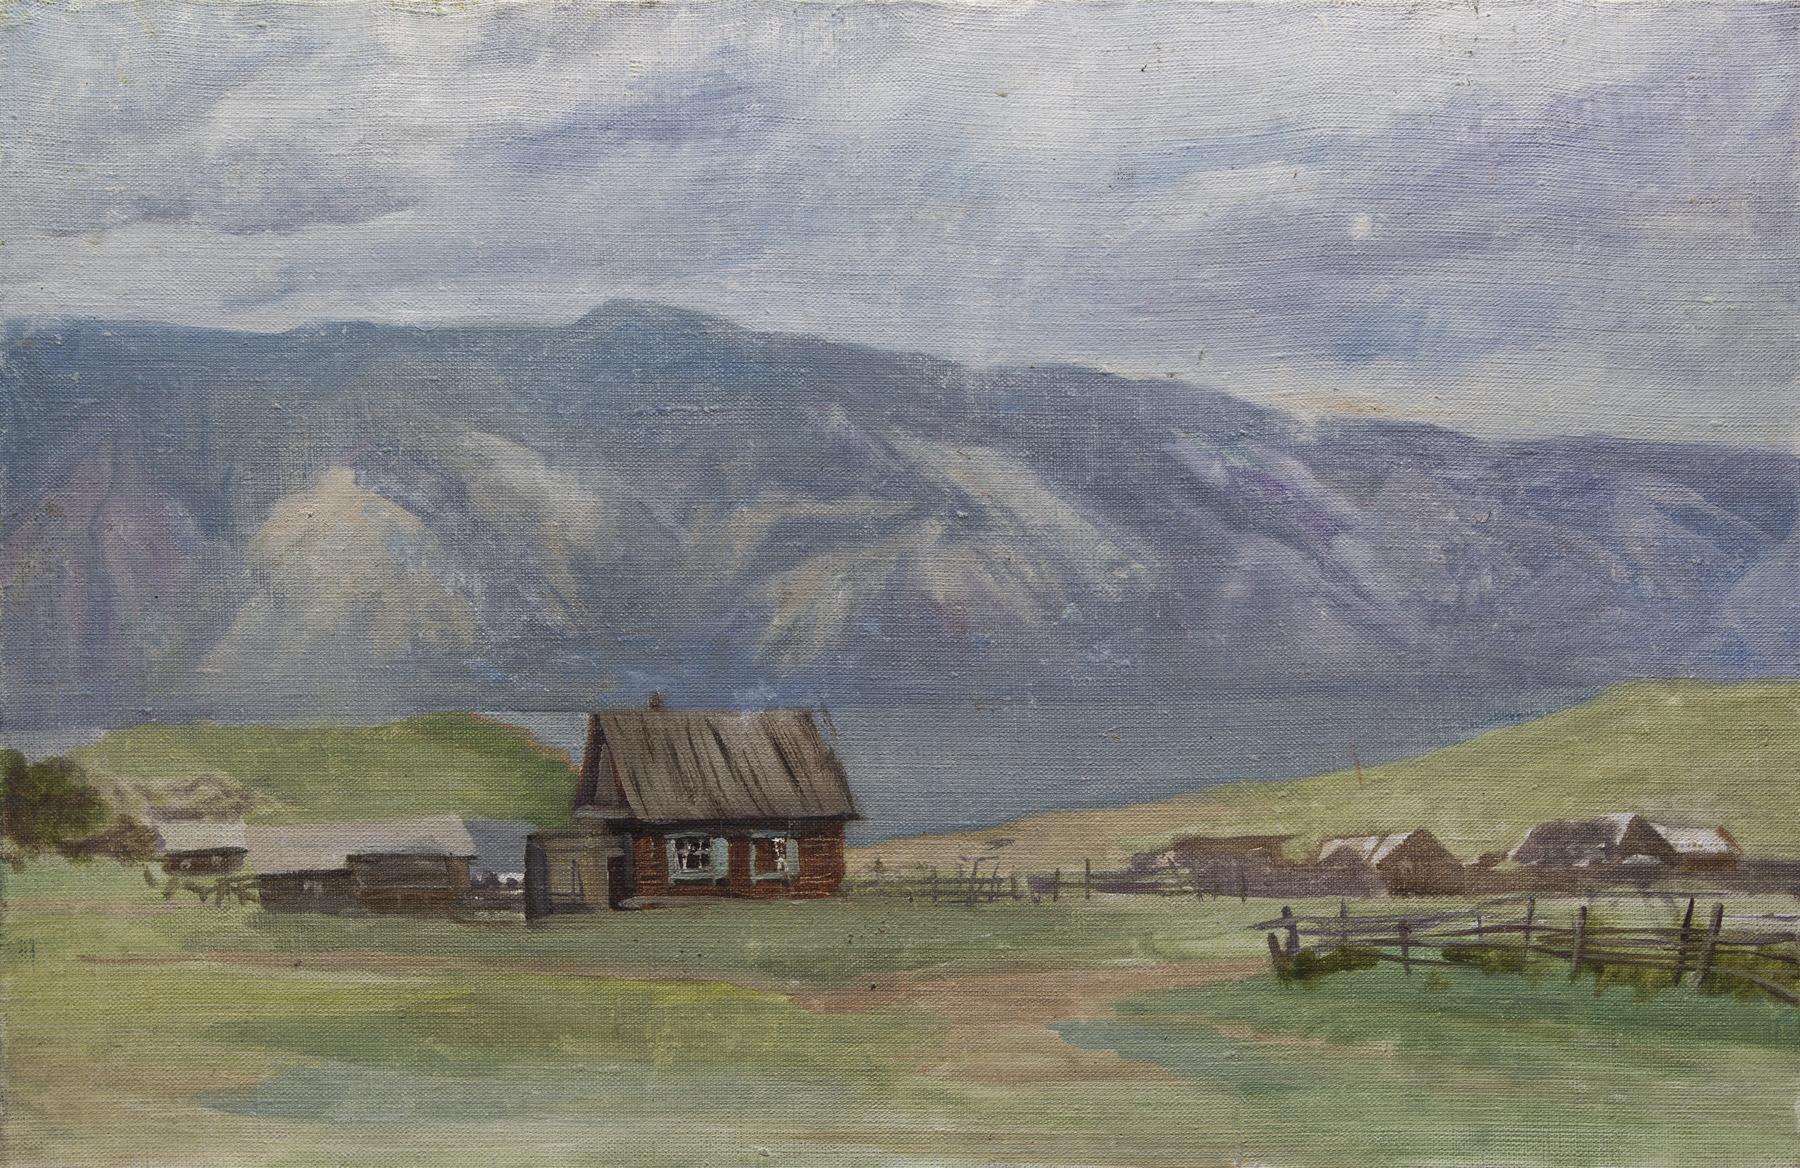 Baikal. The lake house.36x55 cm, oil on canvas. Original modern art painting